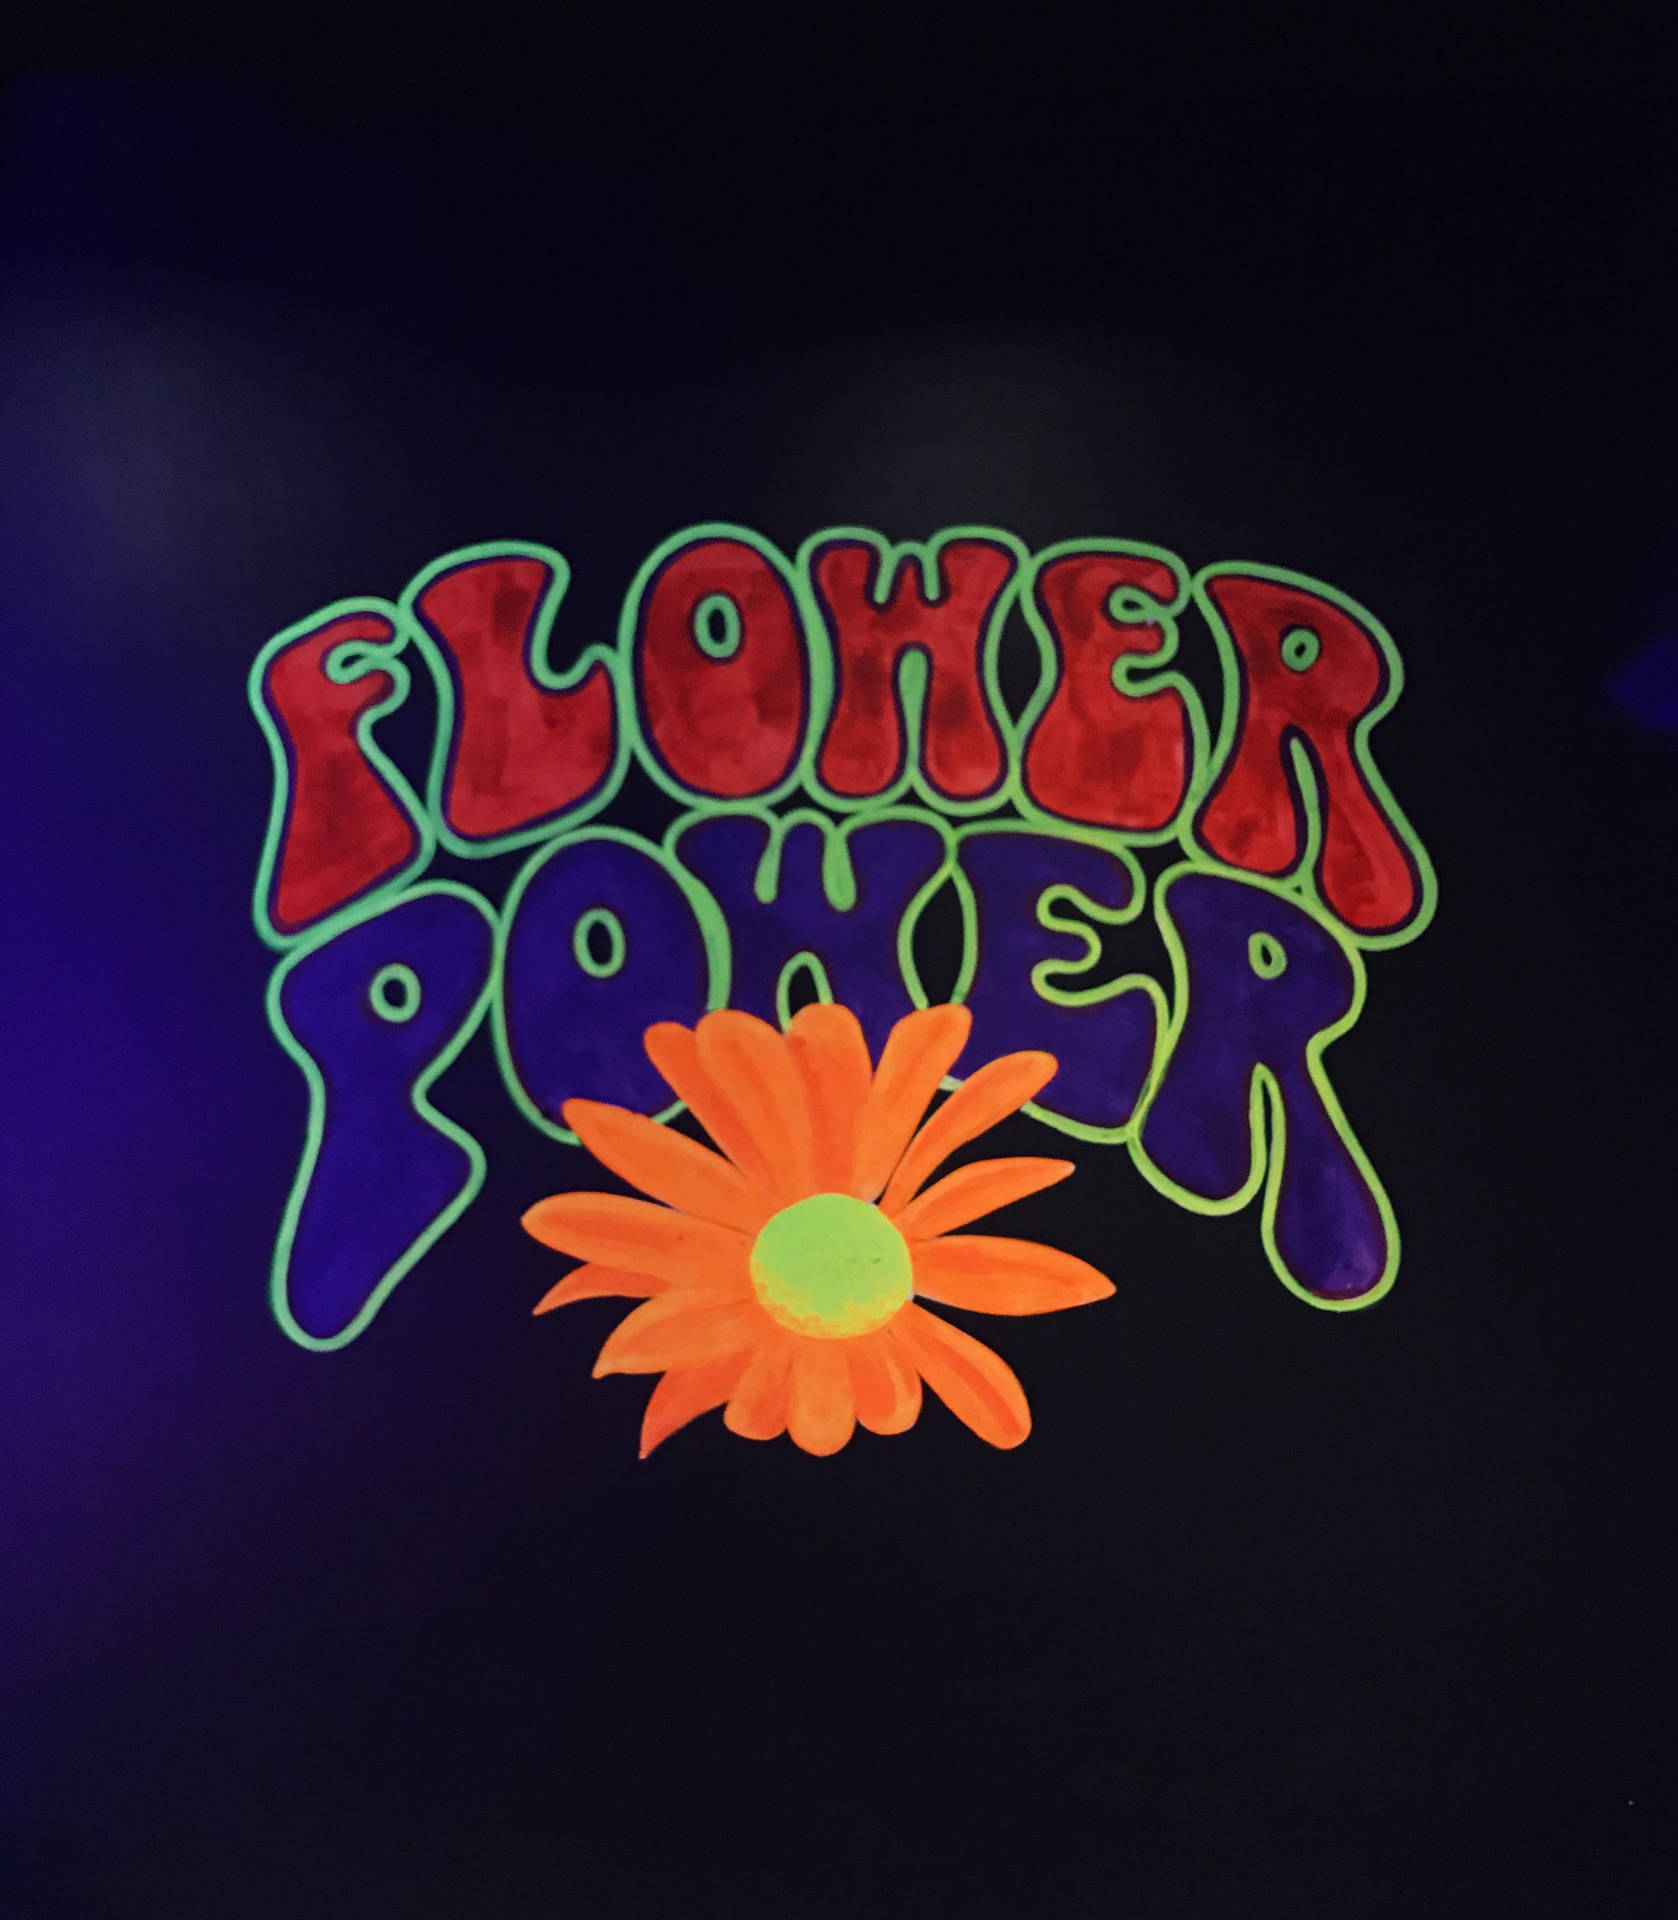 Hippie Flower Power Phrase Wallpaper